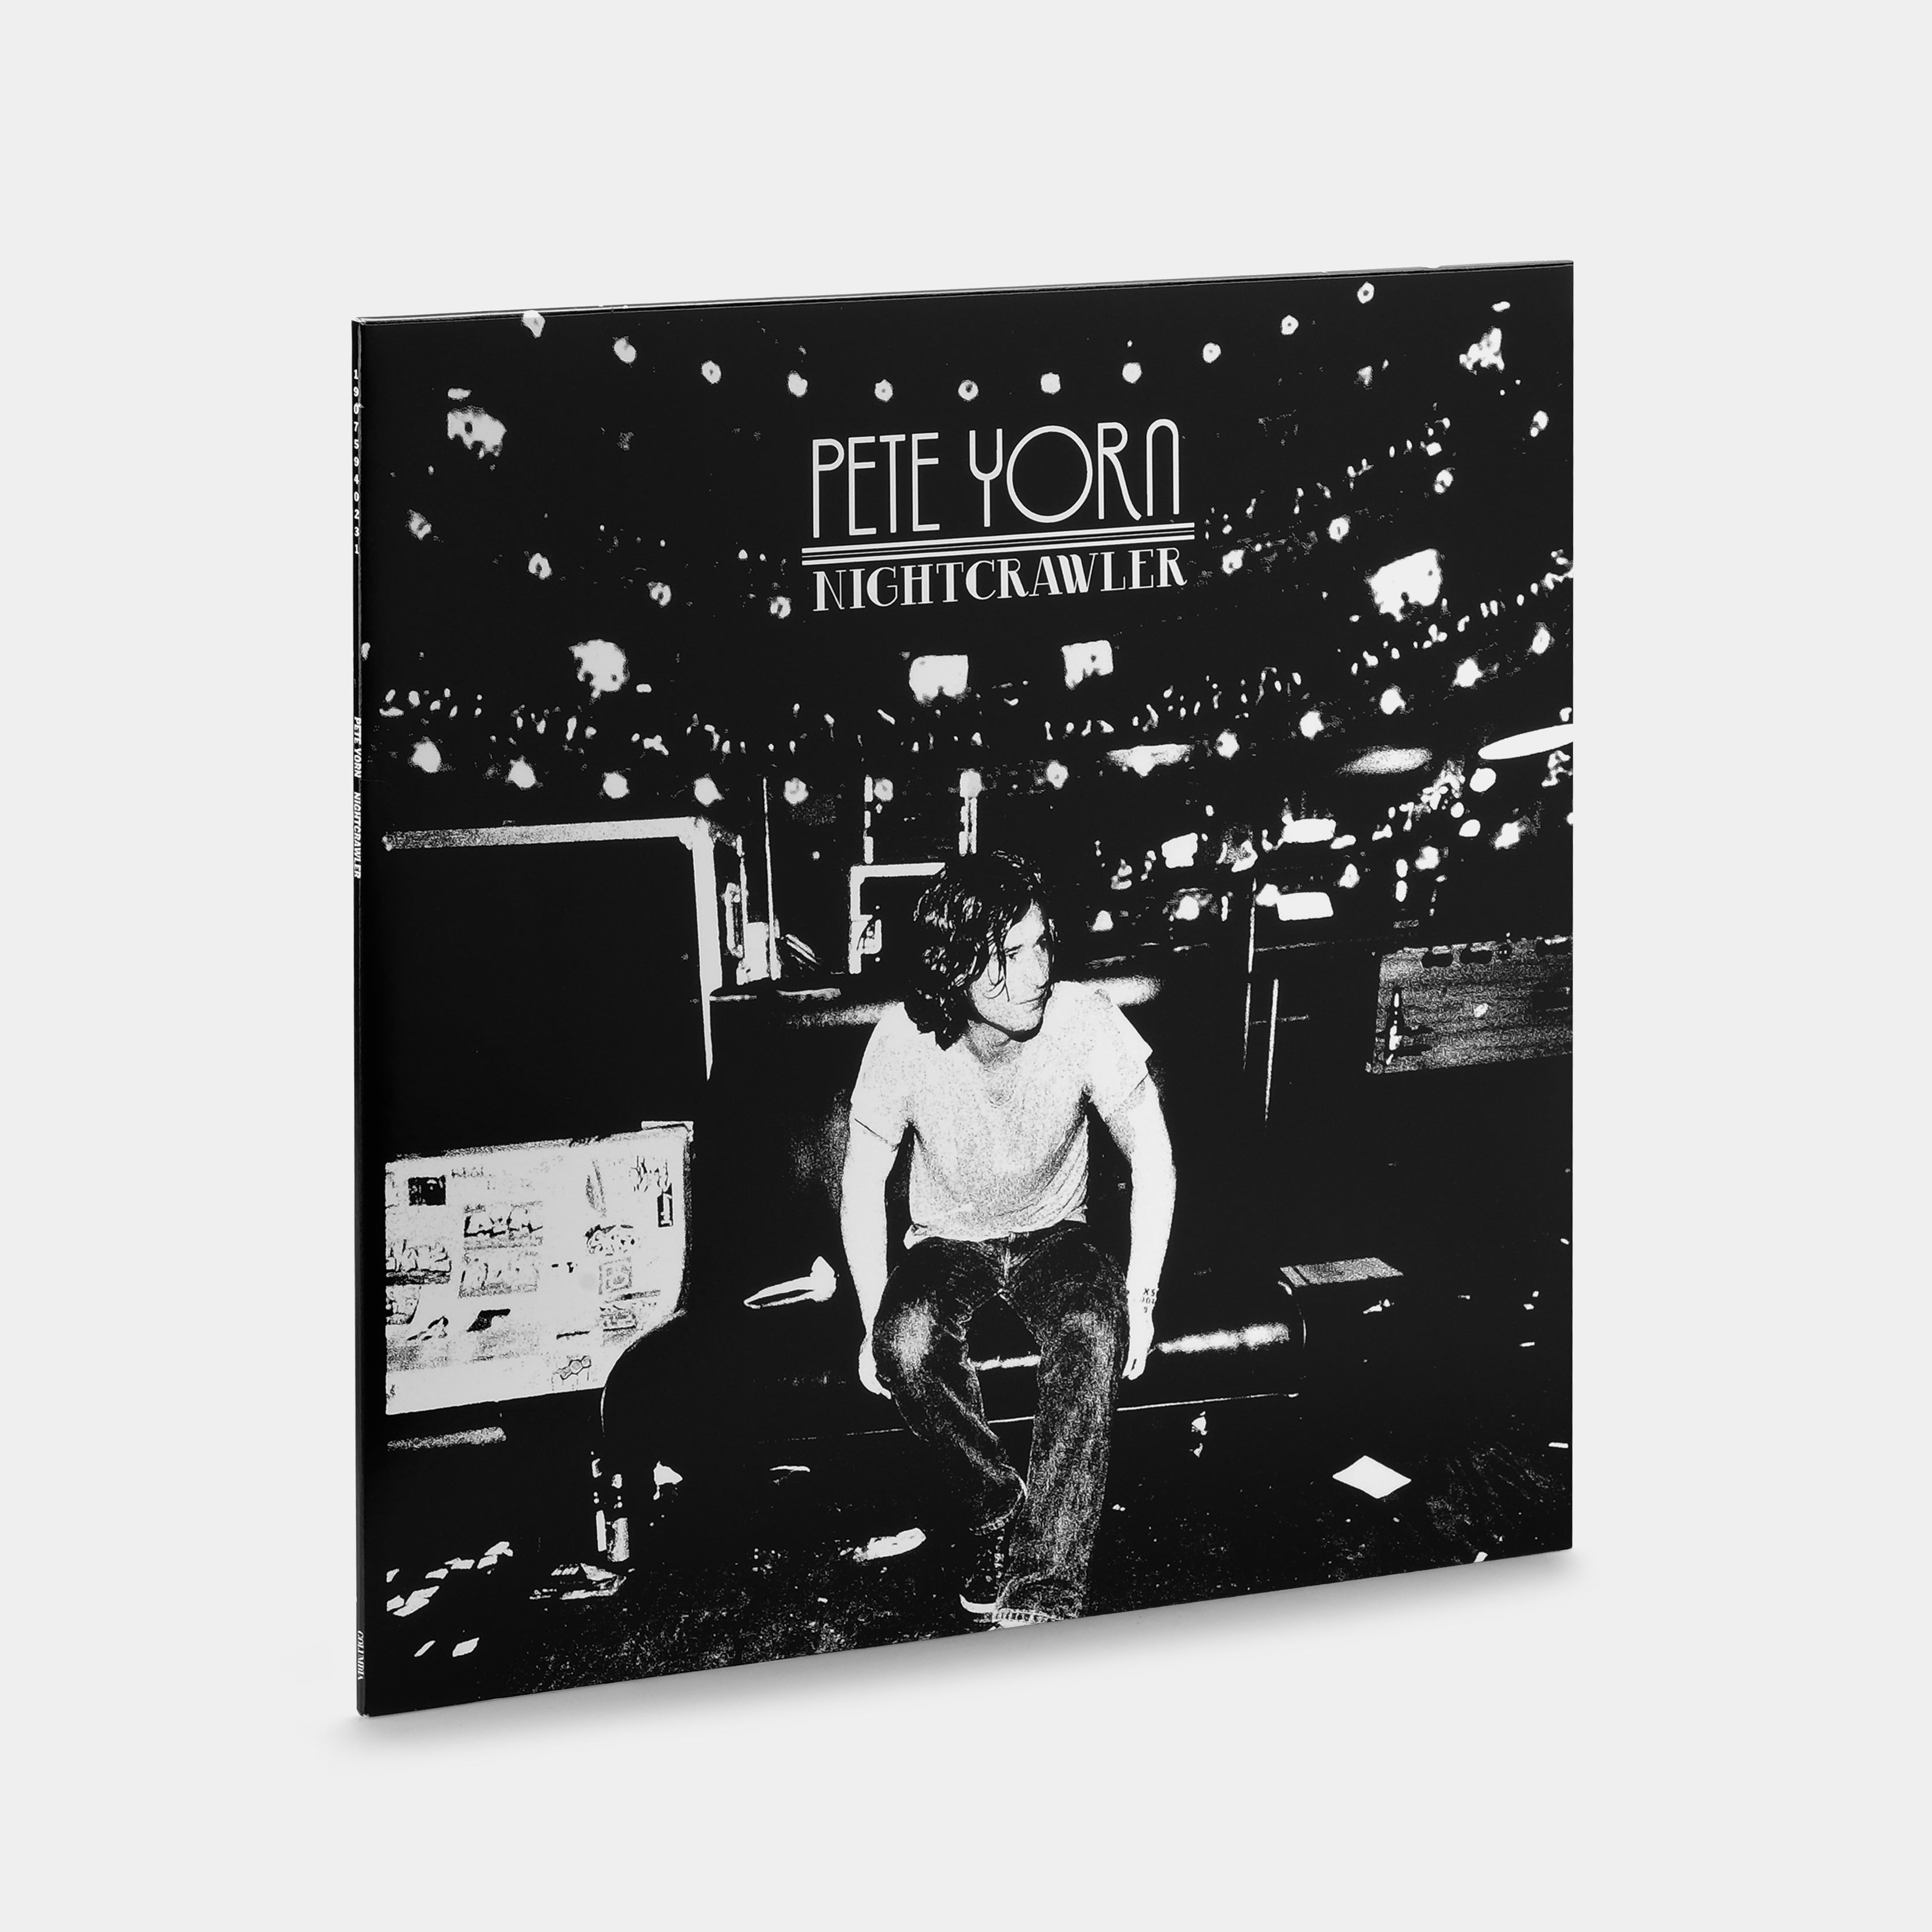 Pete Yorn - Nightcrawler LP Vinyl Record